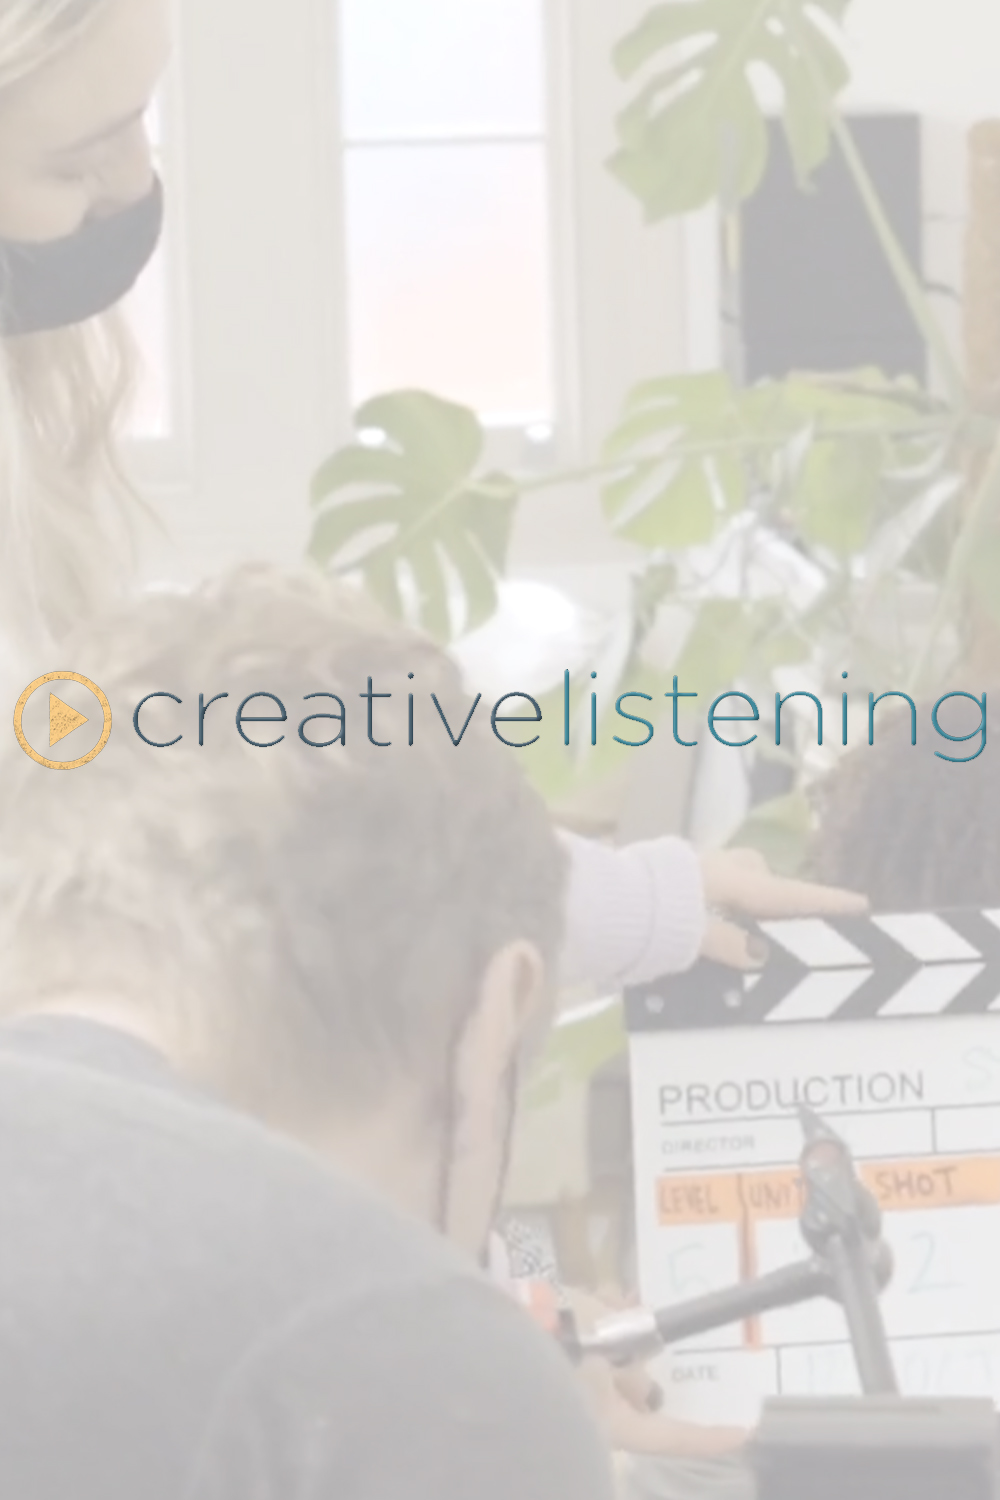 Creative Listening logo